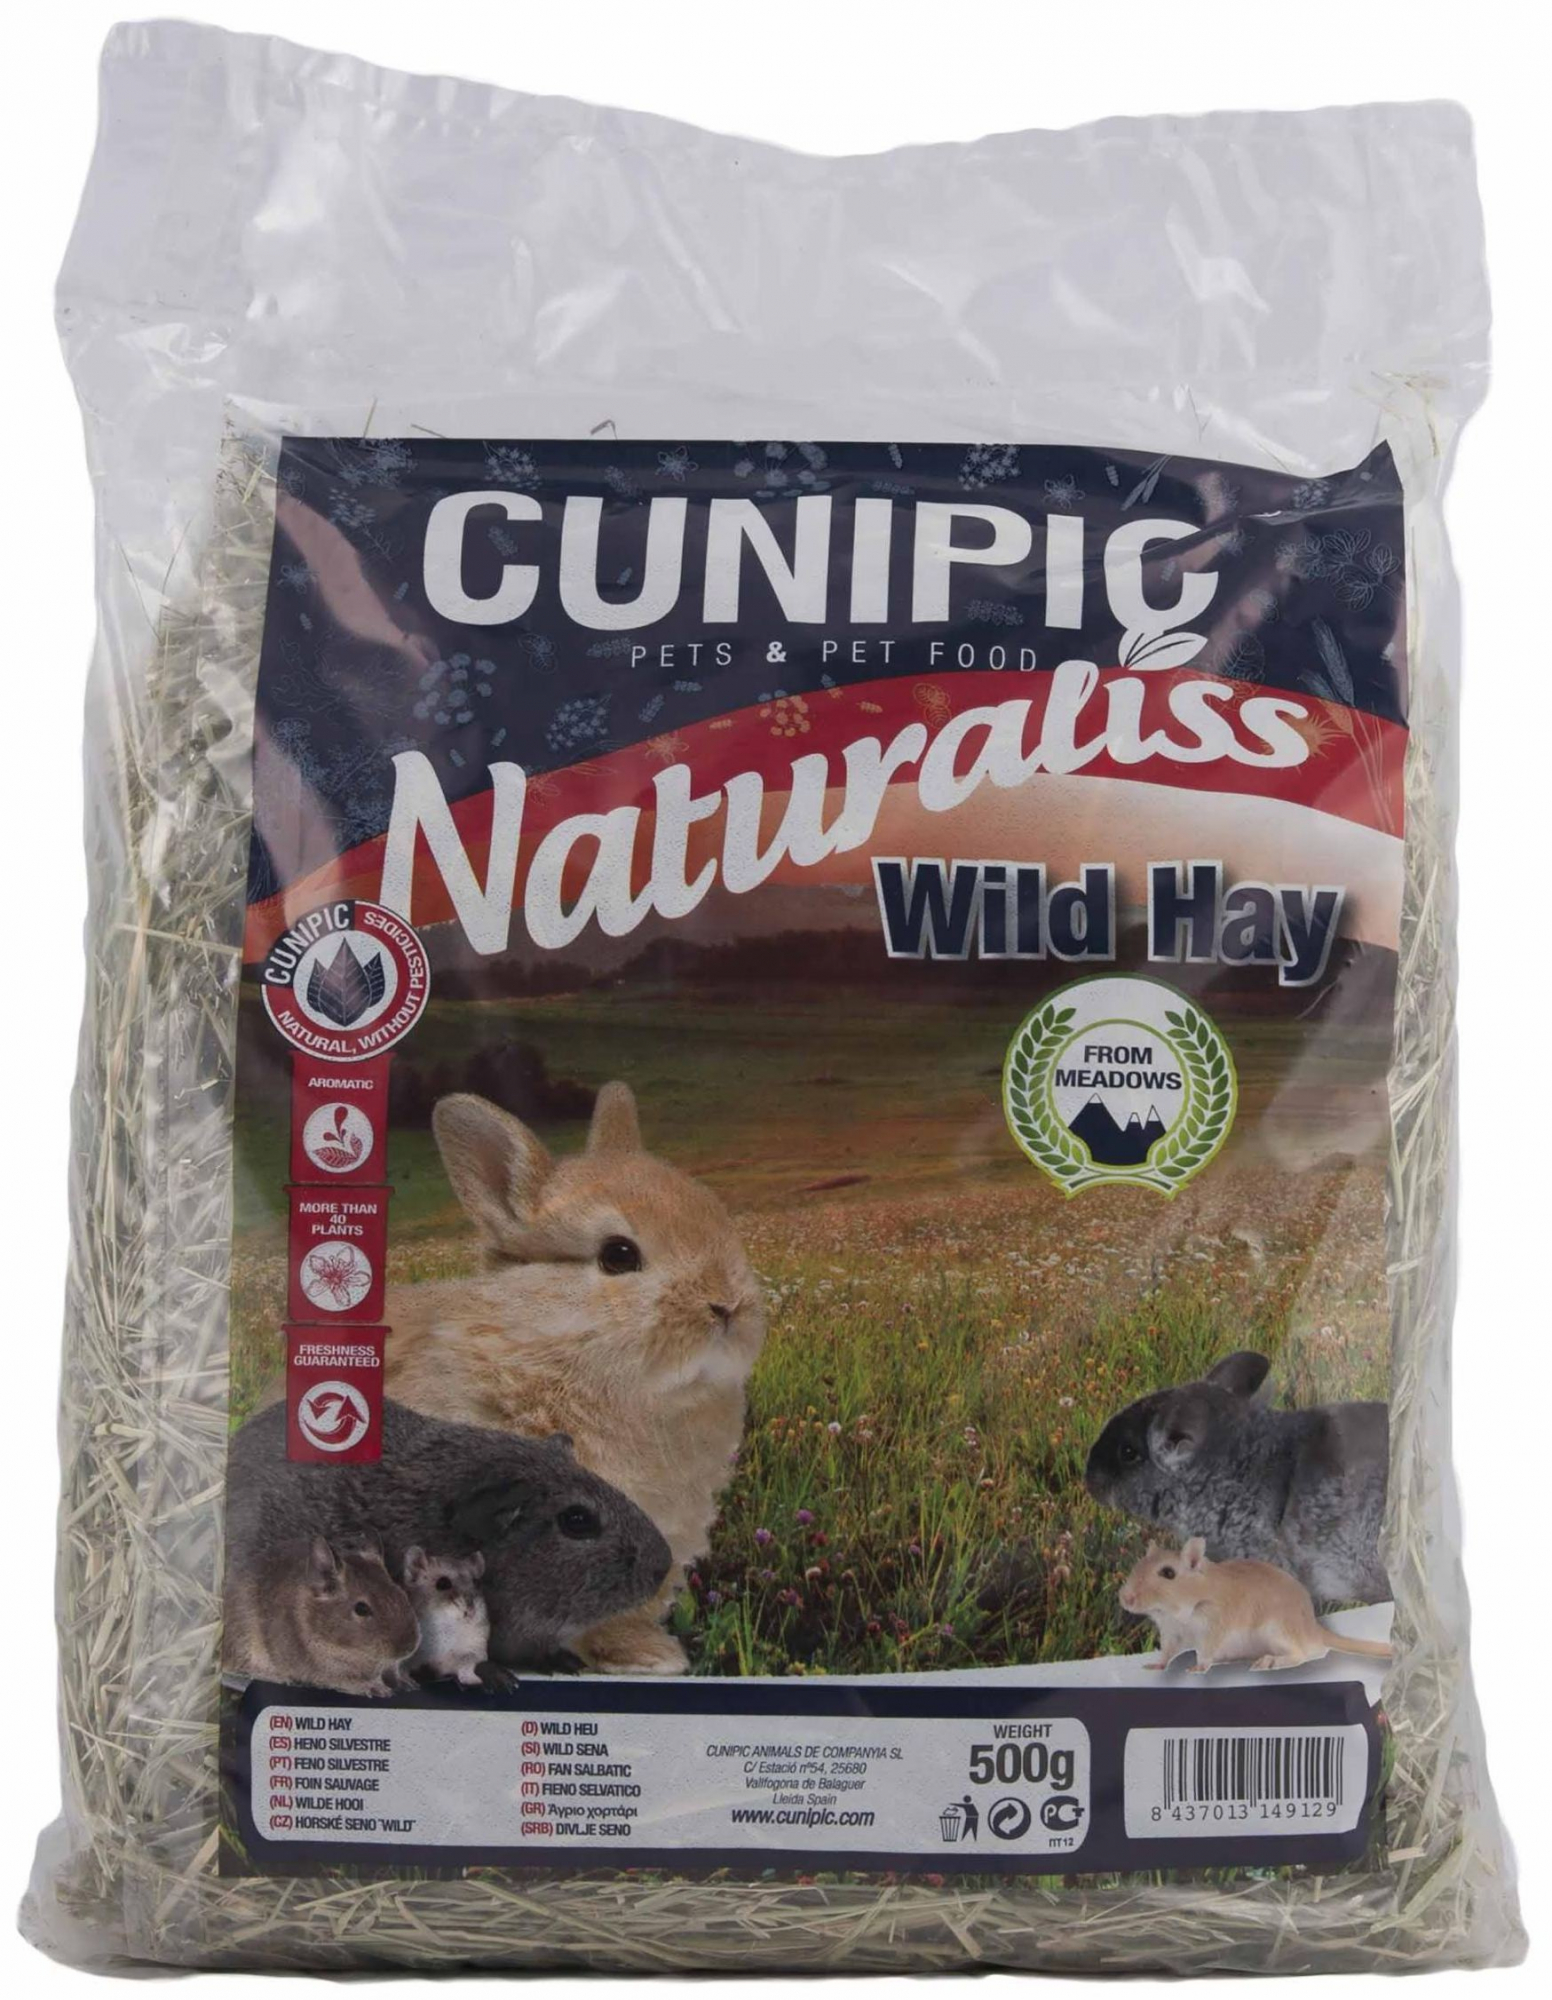 Cunipic Naturaliss Wild Hay